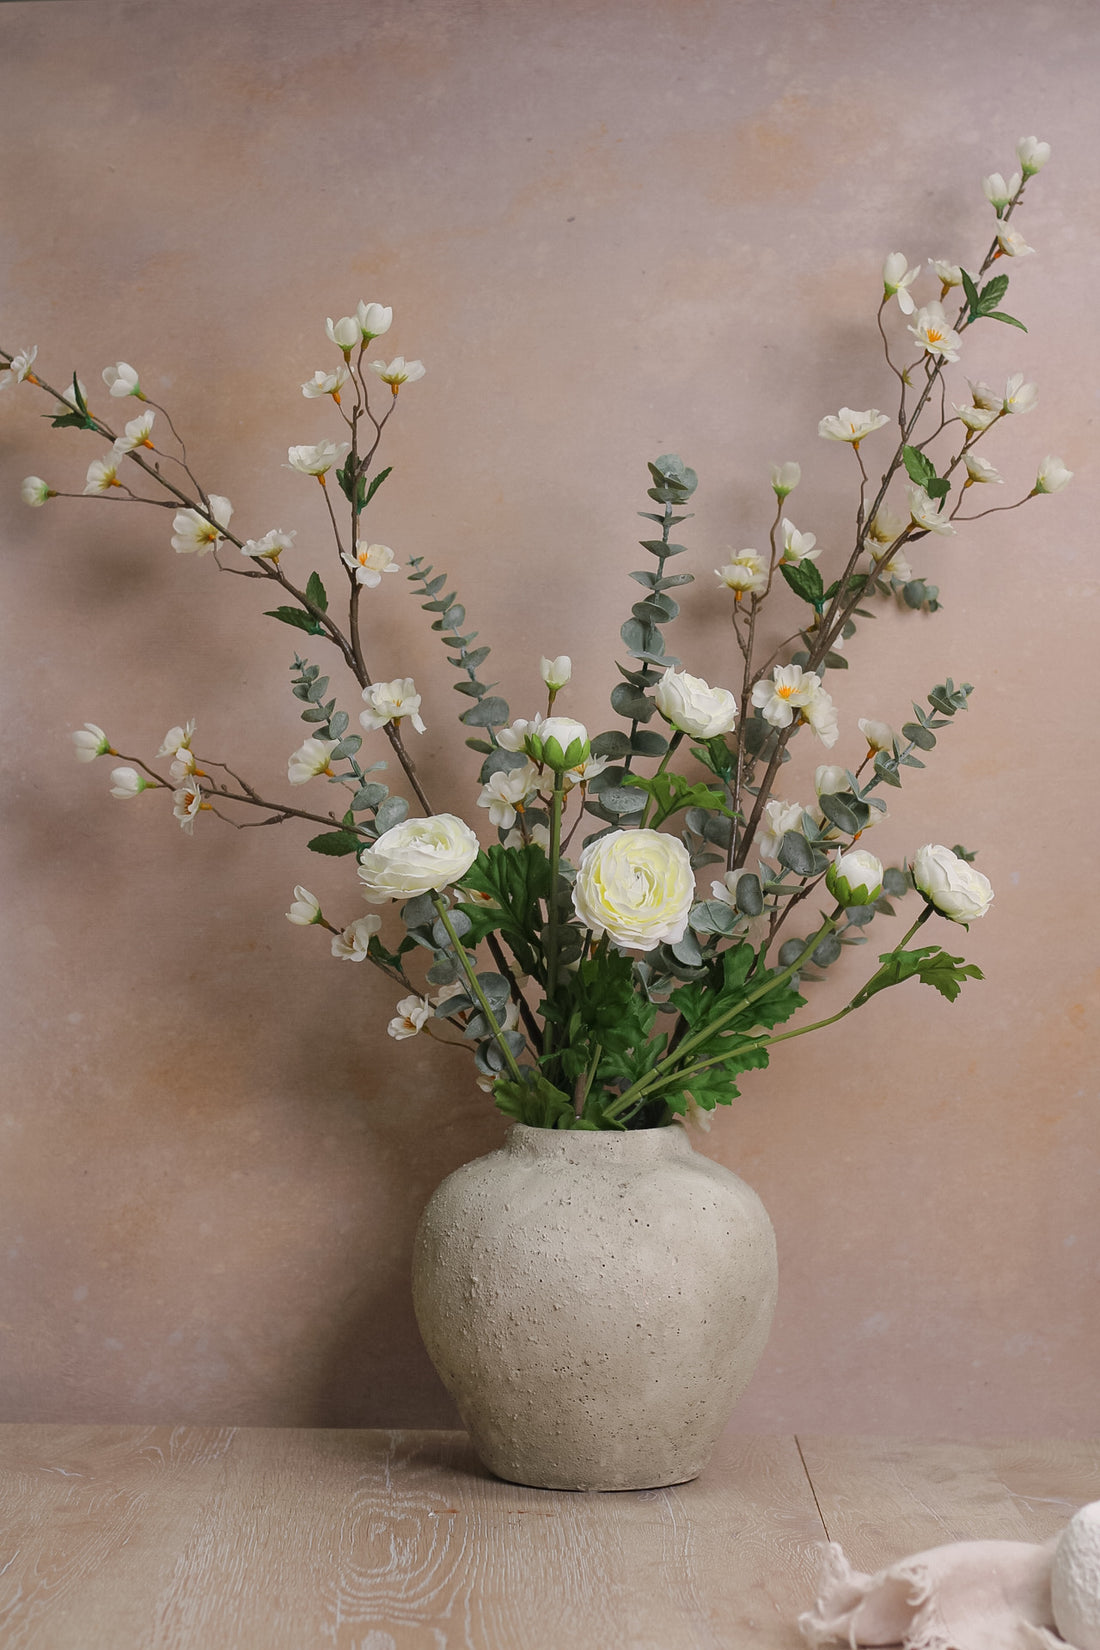 The White Spring Blossom Arrangement